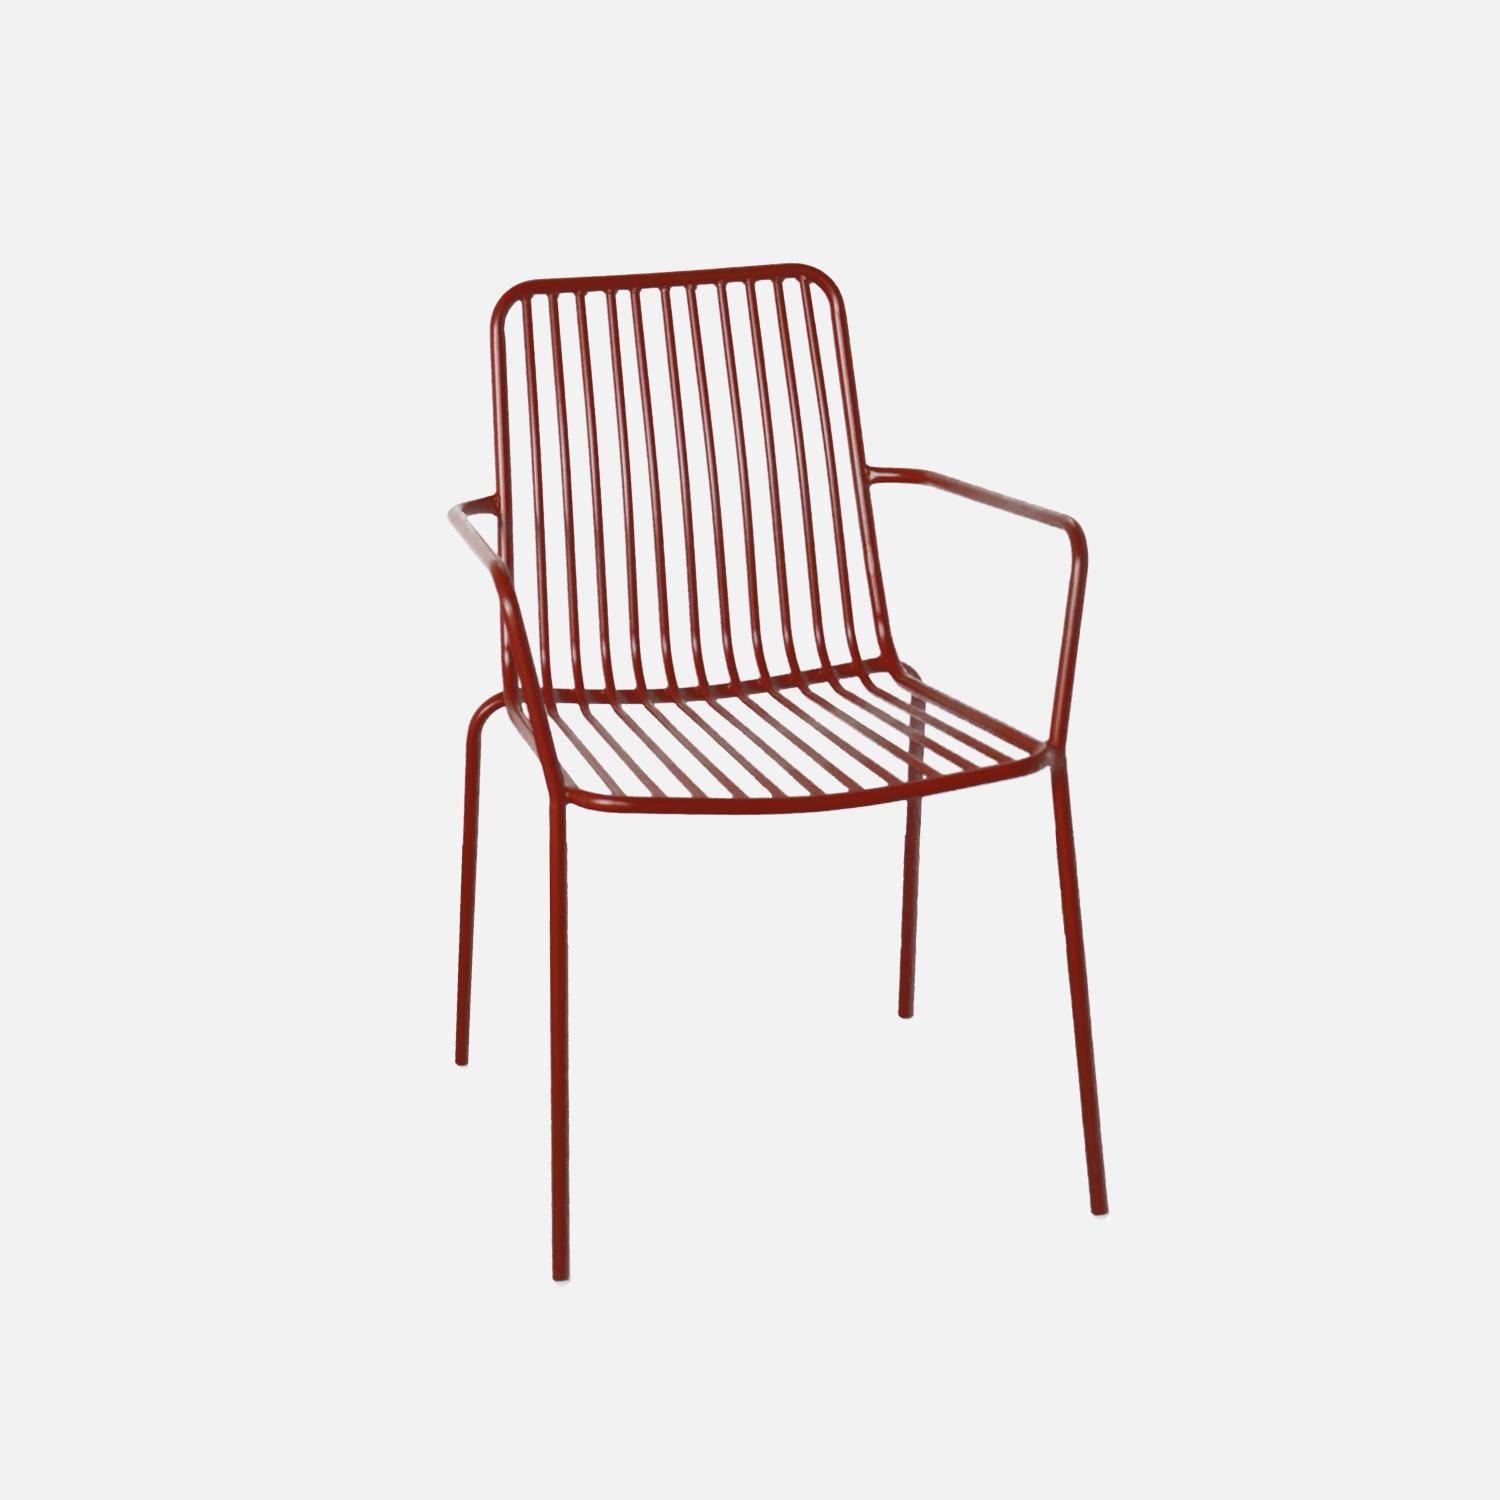 2er Set stapelbare terrakottafarbene Stühle aus Stahl, mit Armlehnen - Florida,sweeek,Photo5